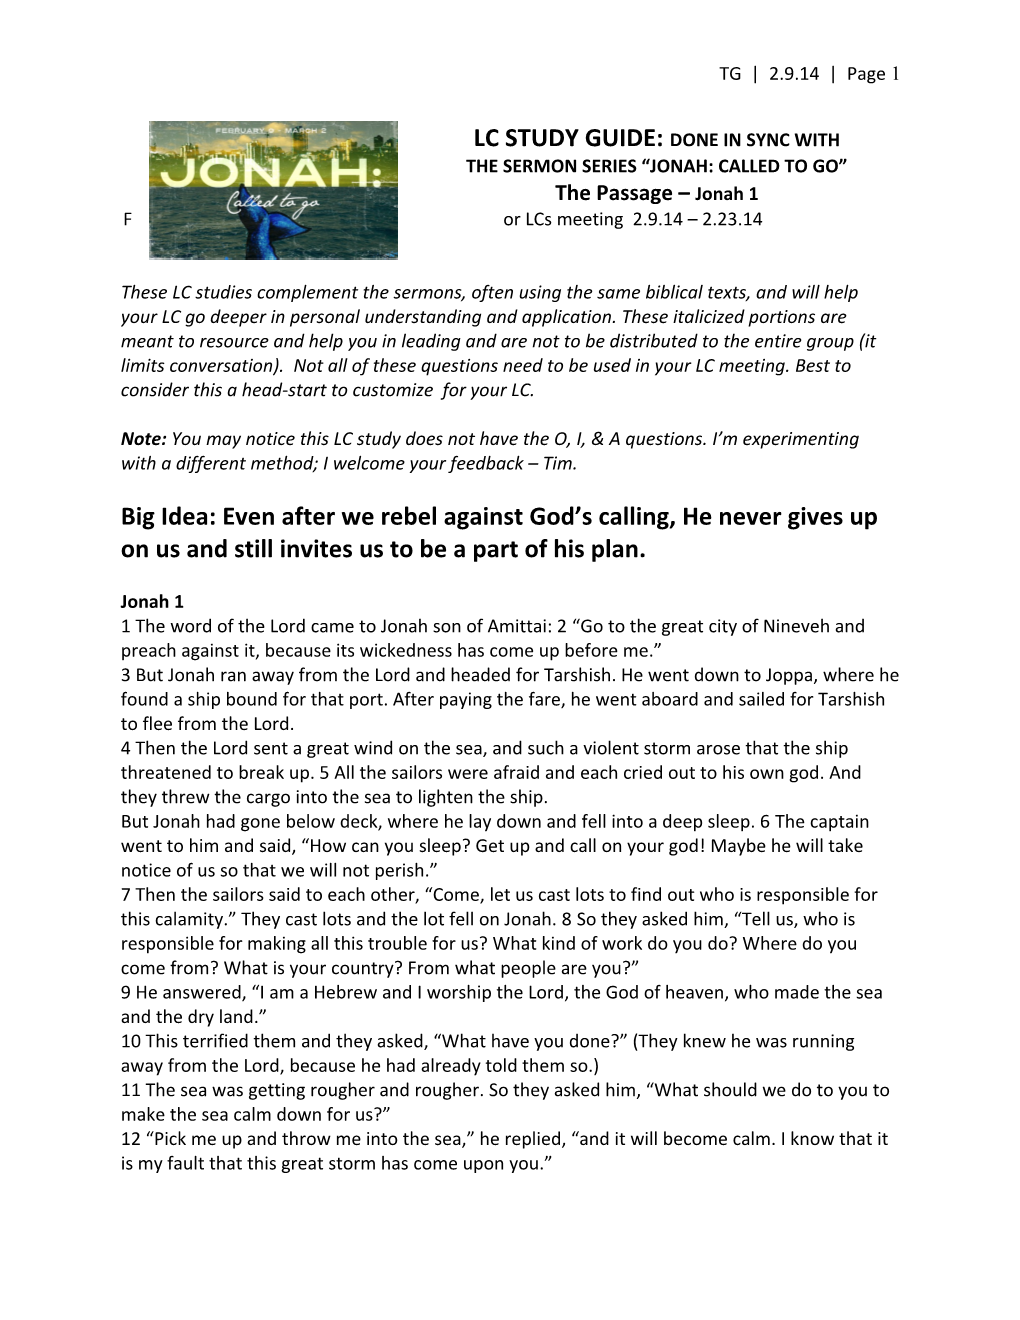 The Sermon Series Jonah: Called to Go